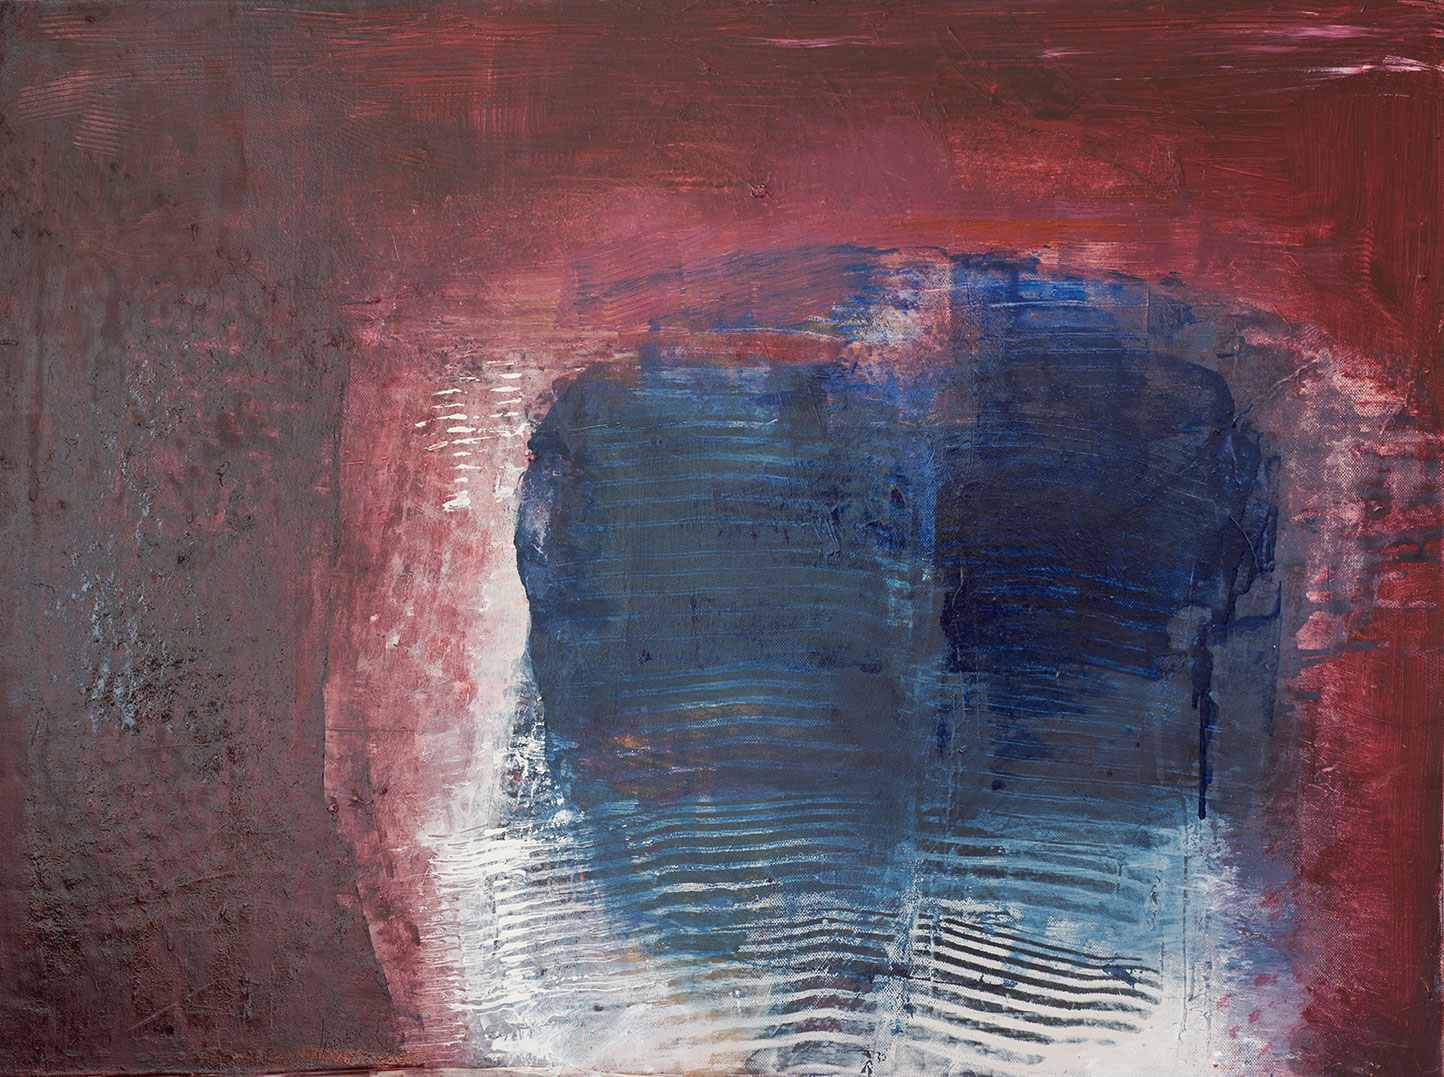 Jules Allan, Blue Centre, Mixed media on canvas, 80 x 60cm